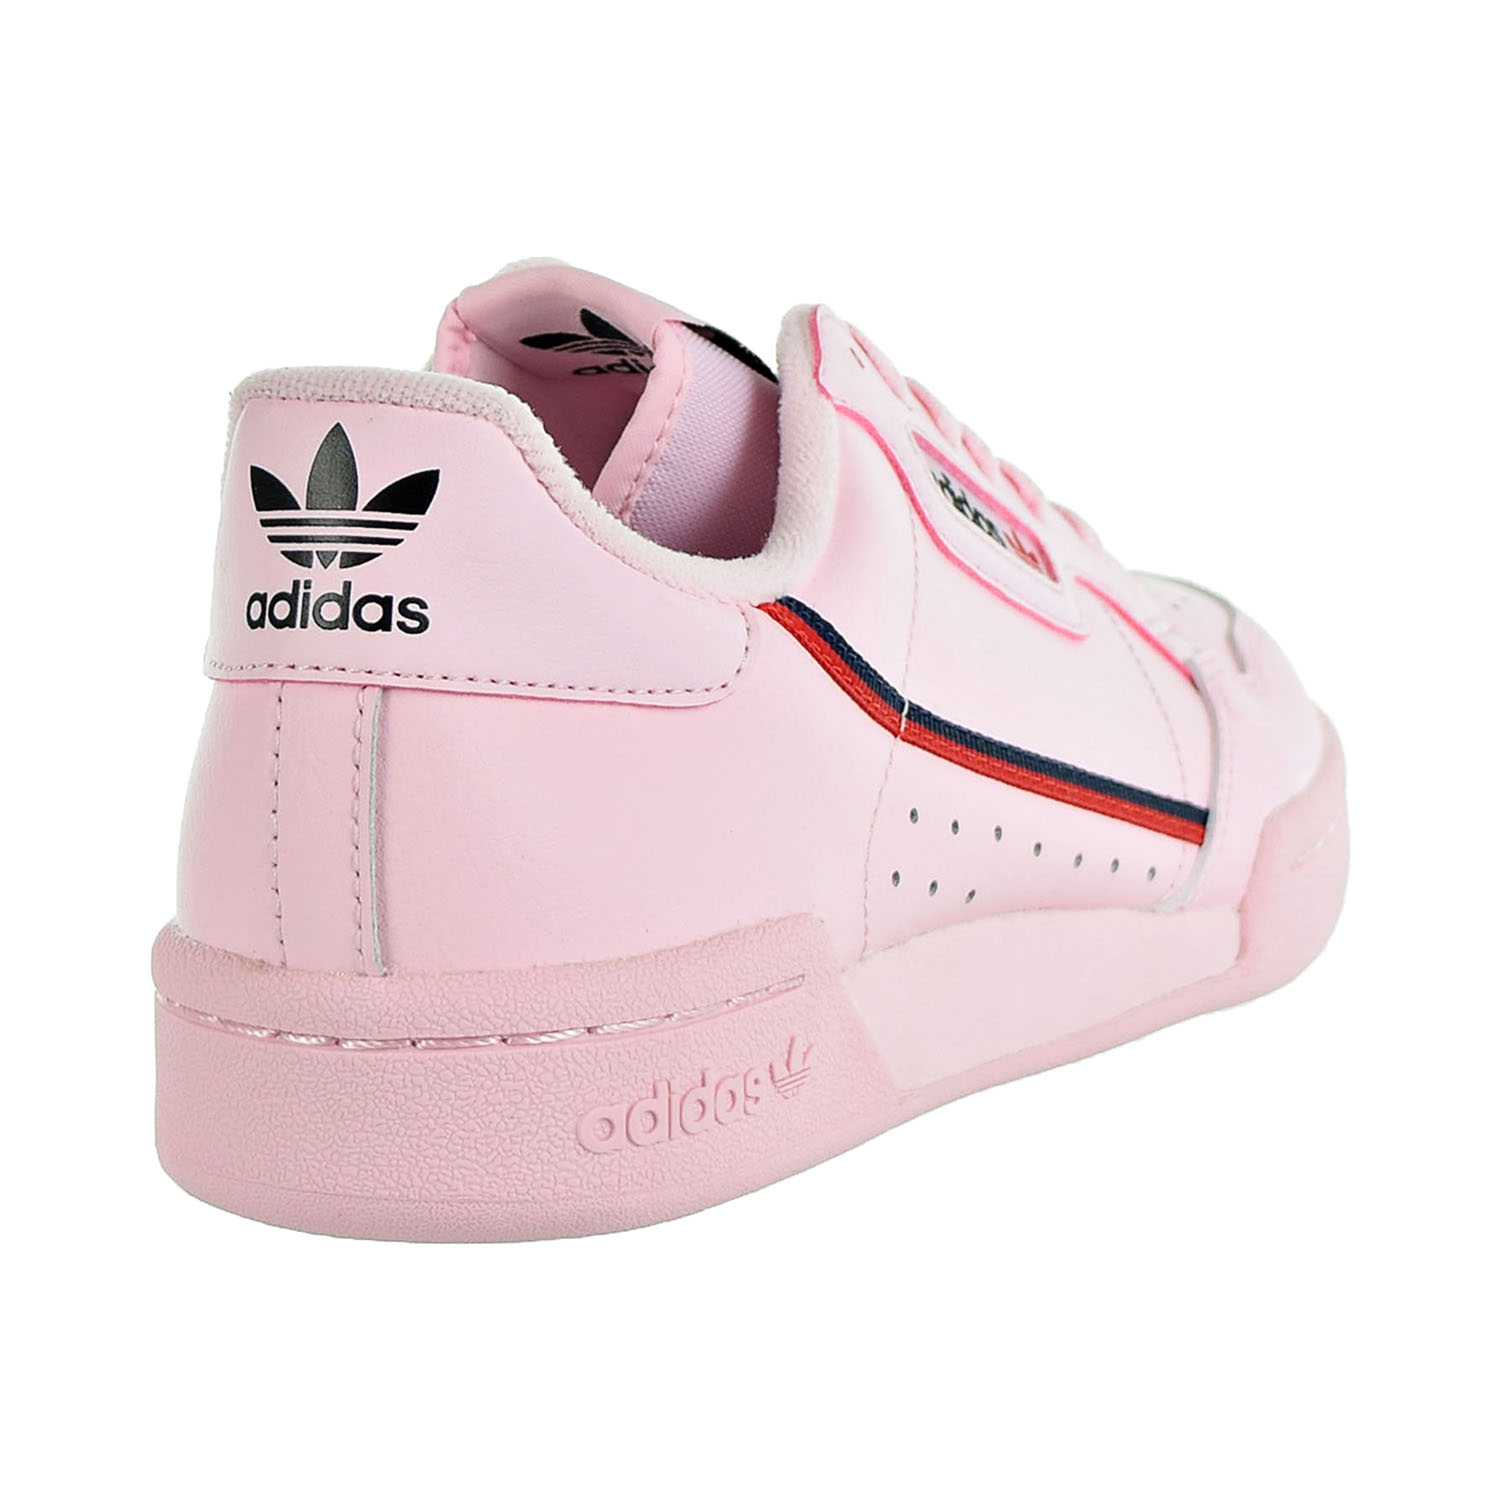 adidas continental 80 pink kids